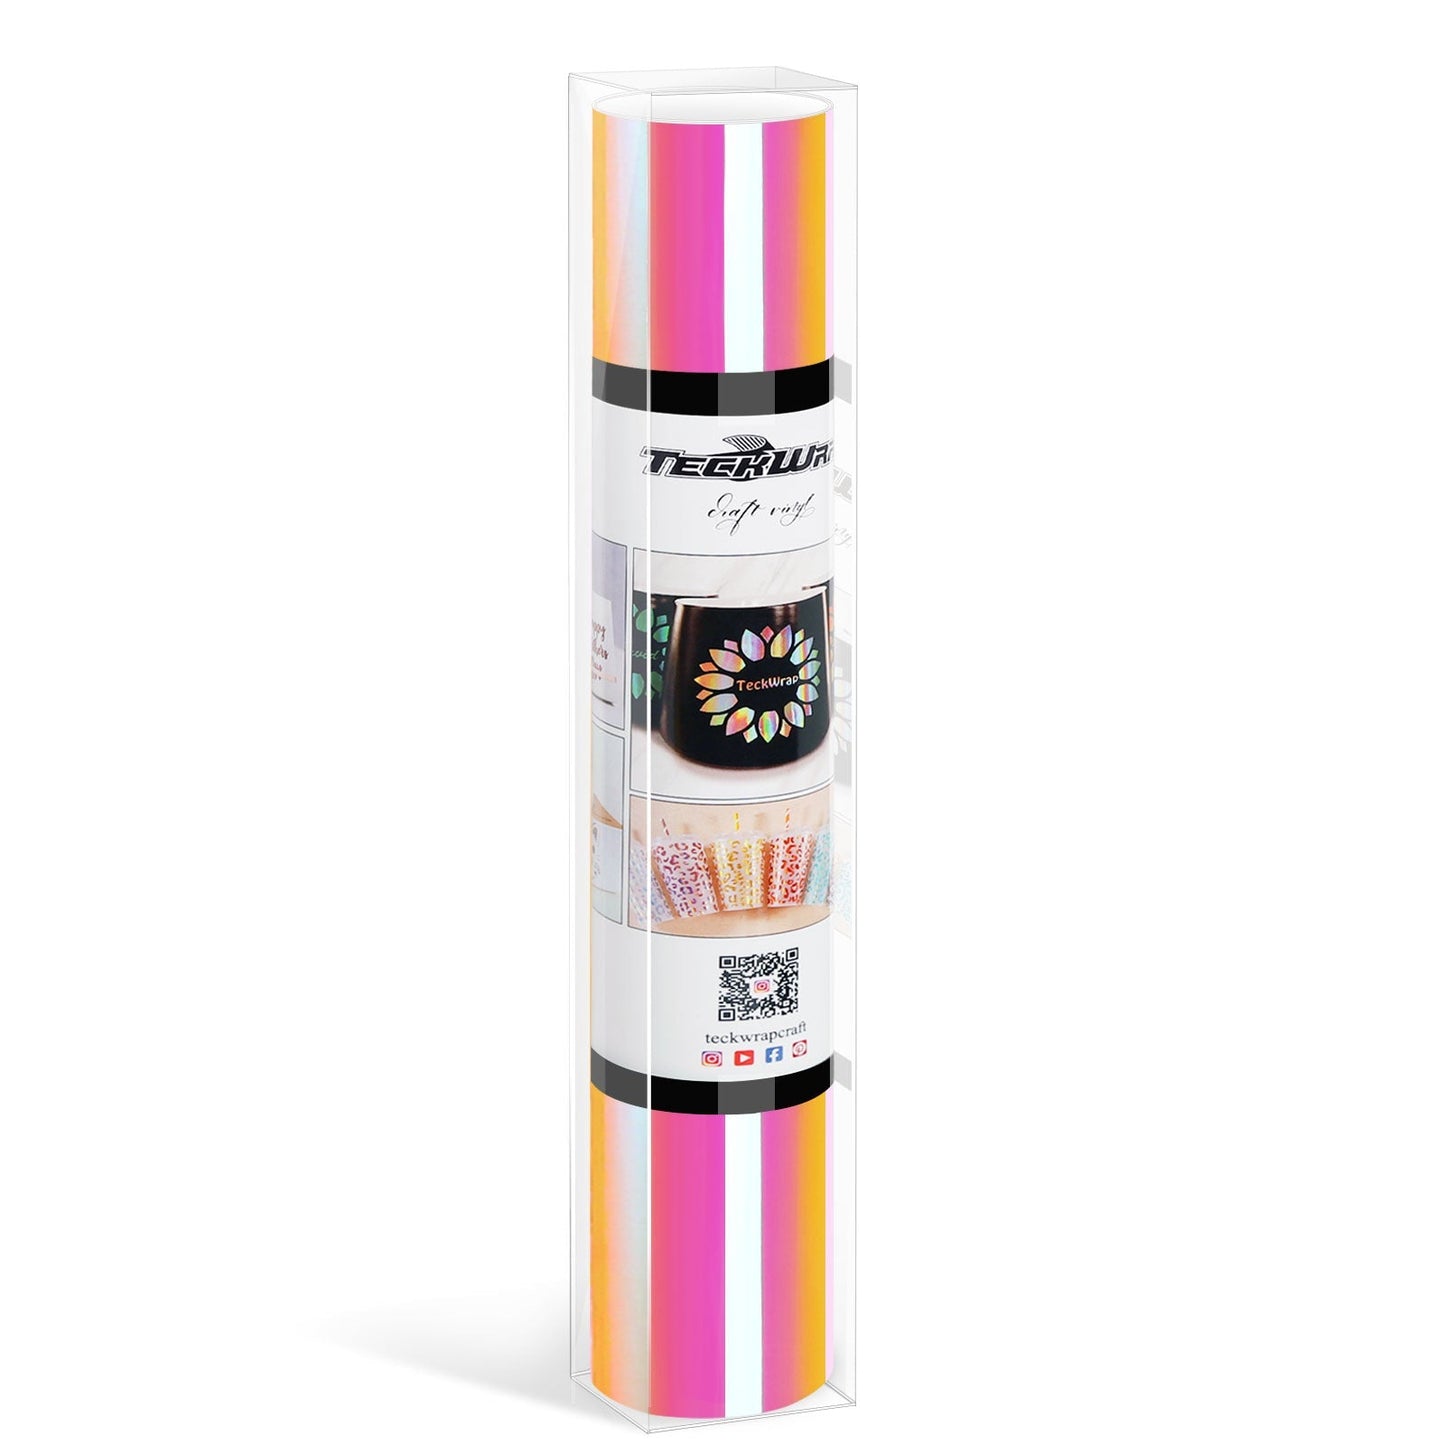 TeckWrap Adhesive Craft Vinyl Roll 13"x5ft Opal Peach Yellow Pink